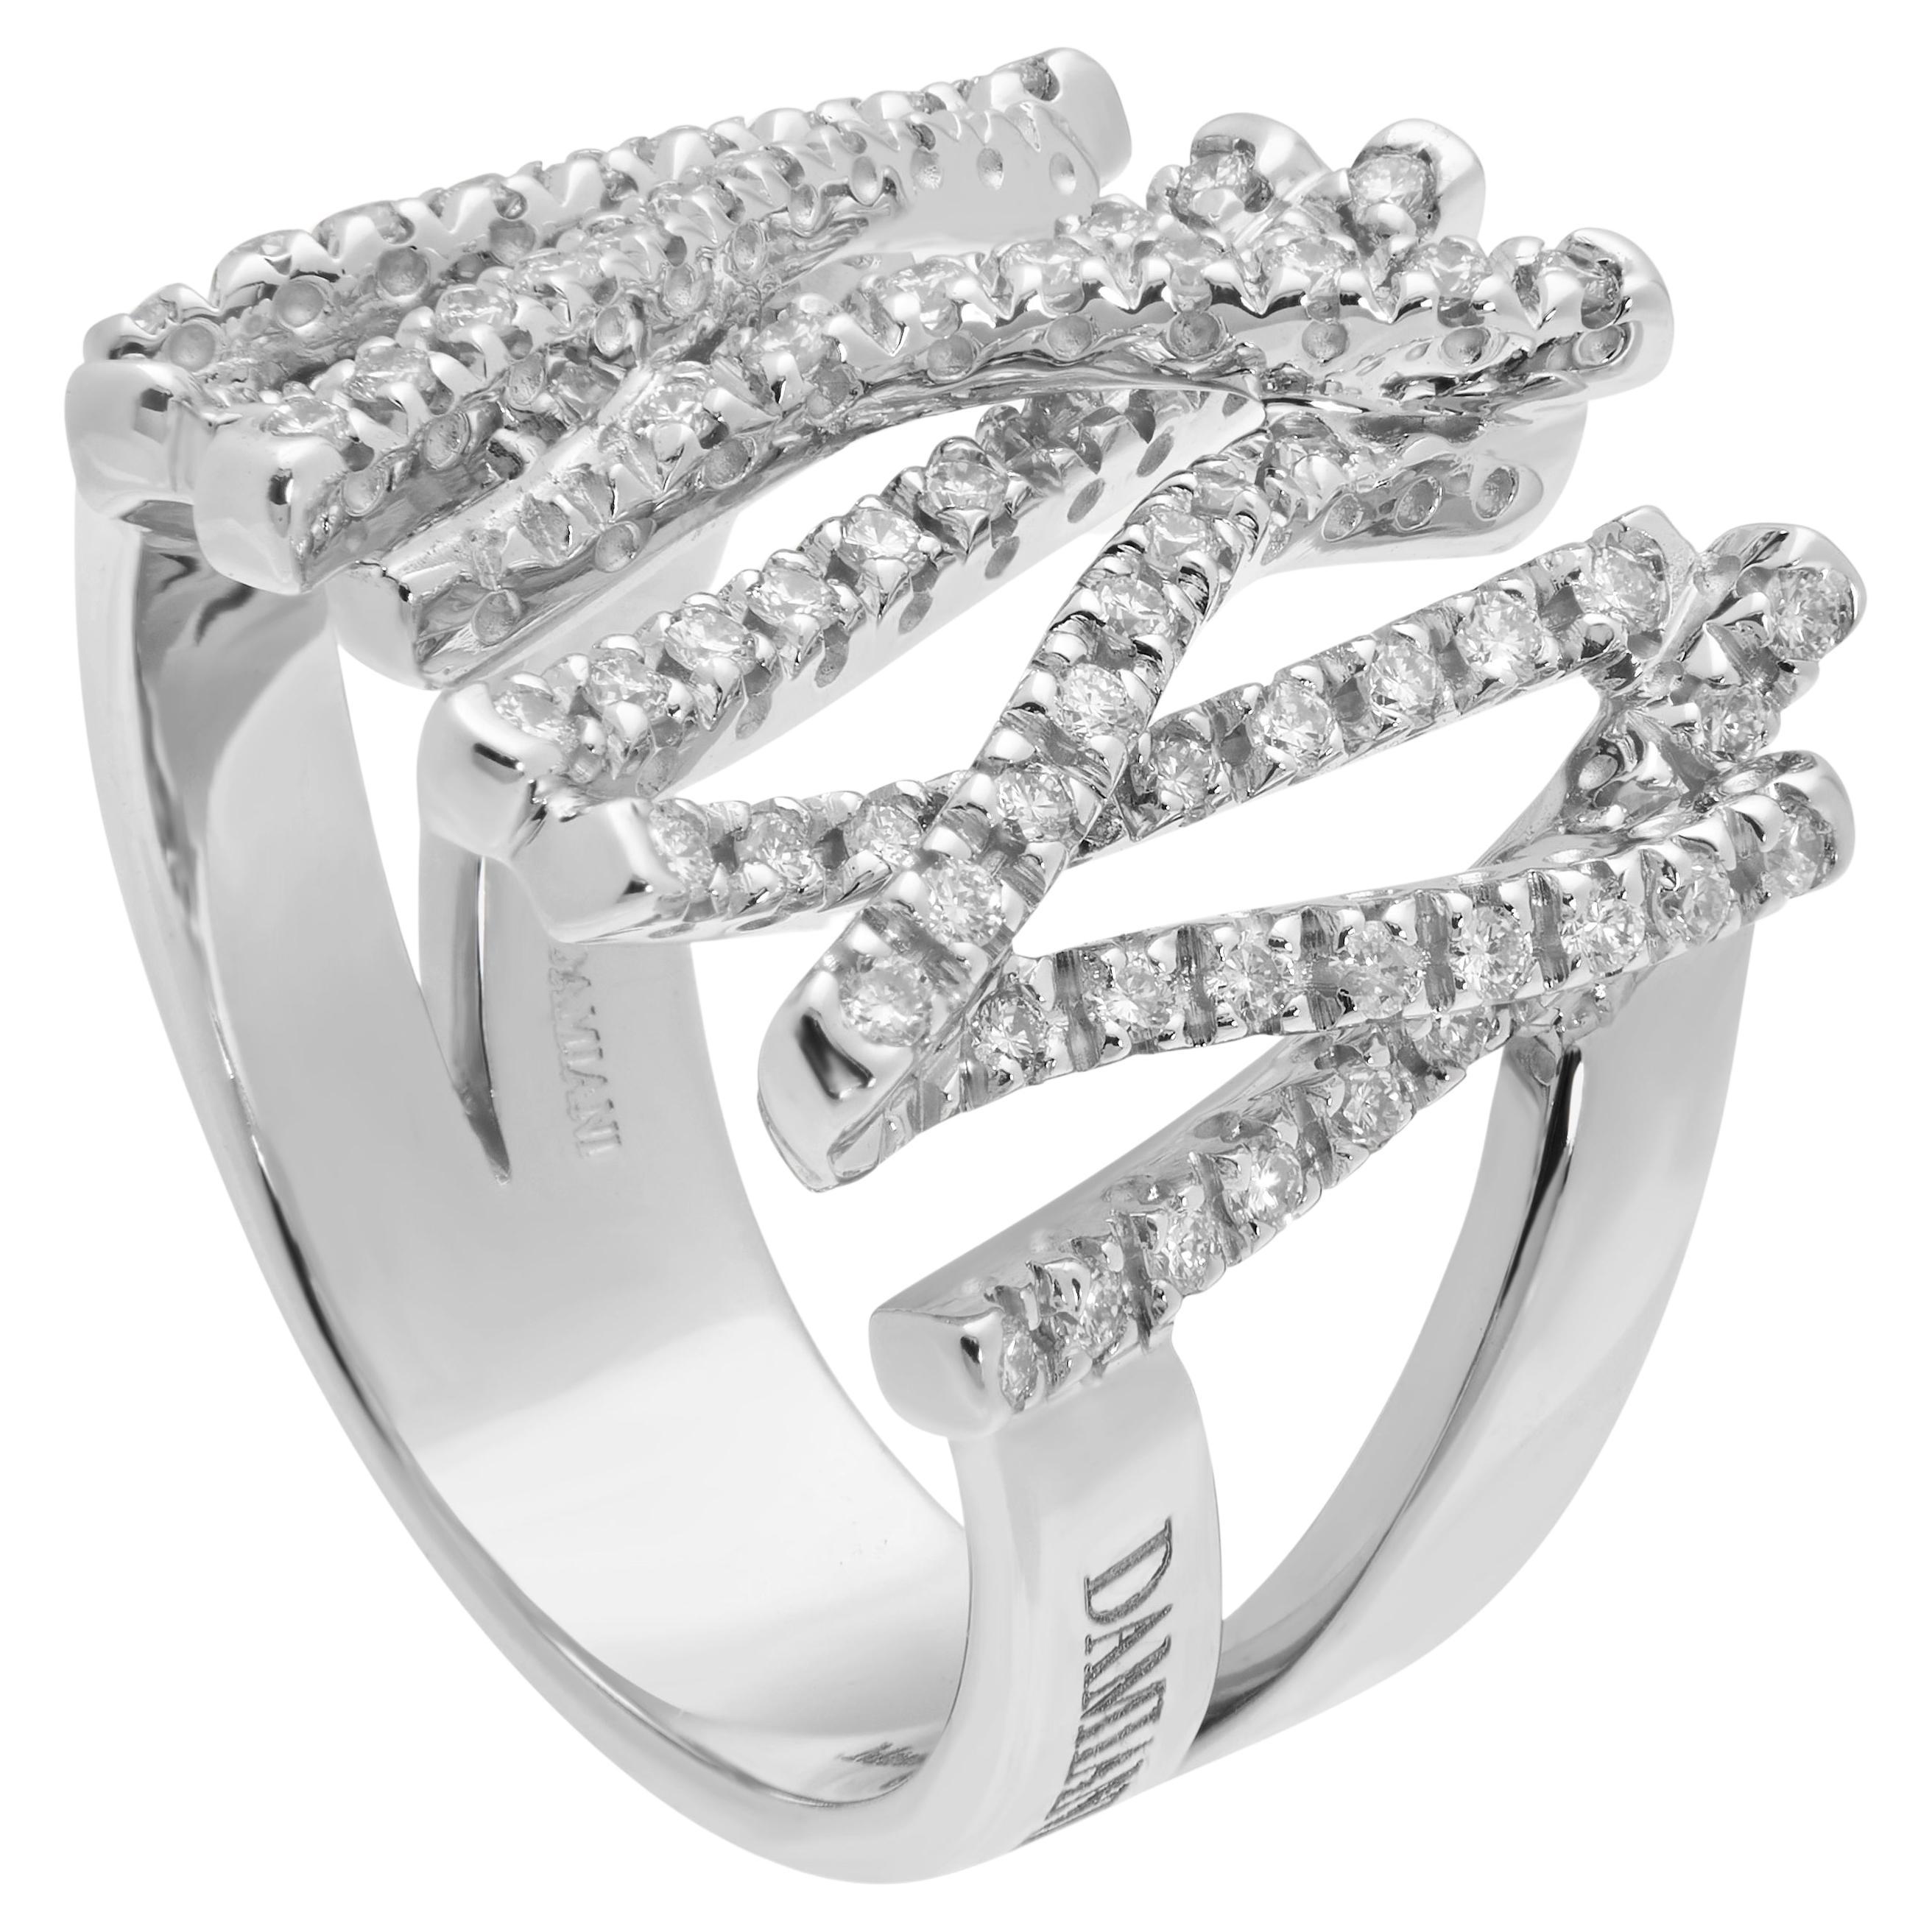 Damiani 18K White Gold, Diamond Statement Ring Sz. 7.25 For Sale